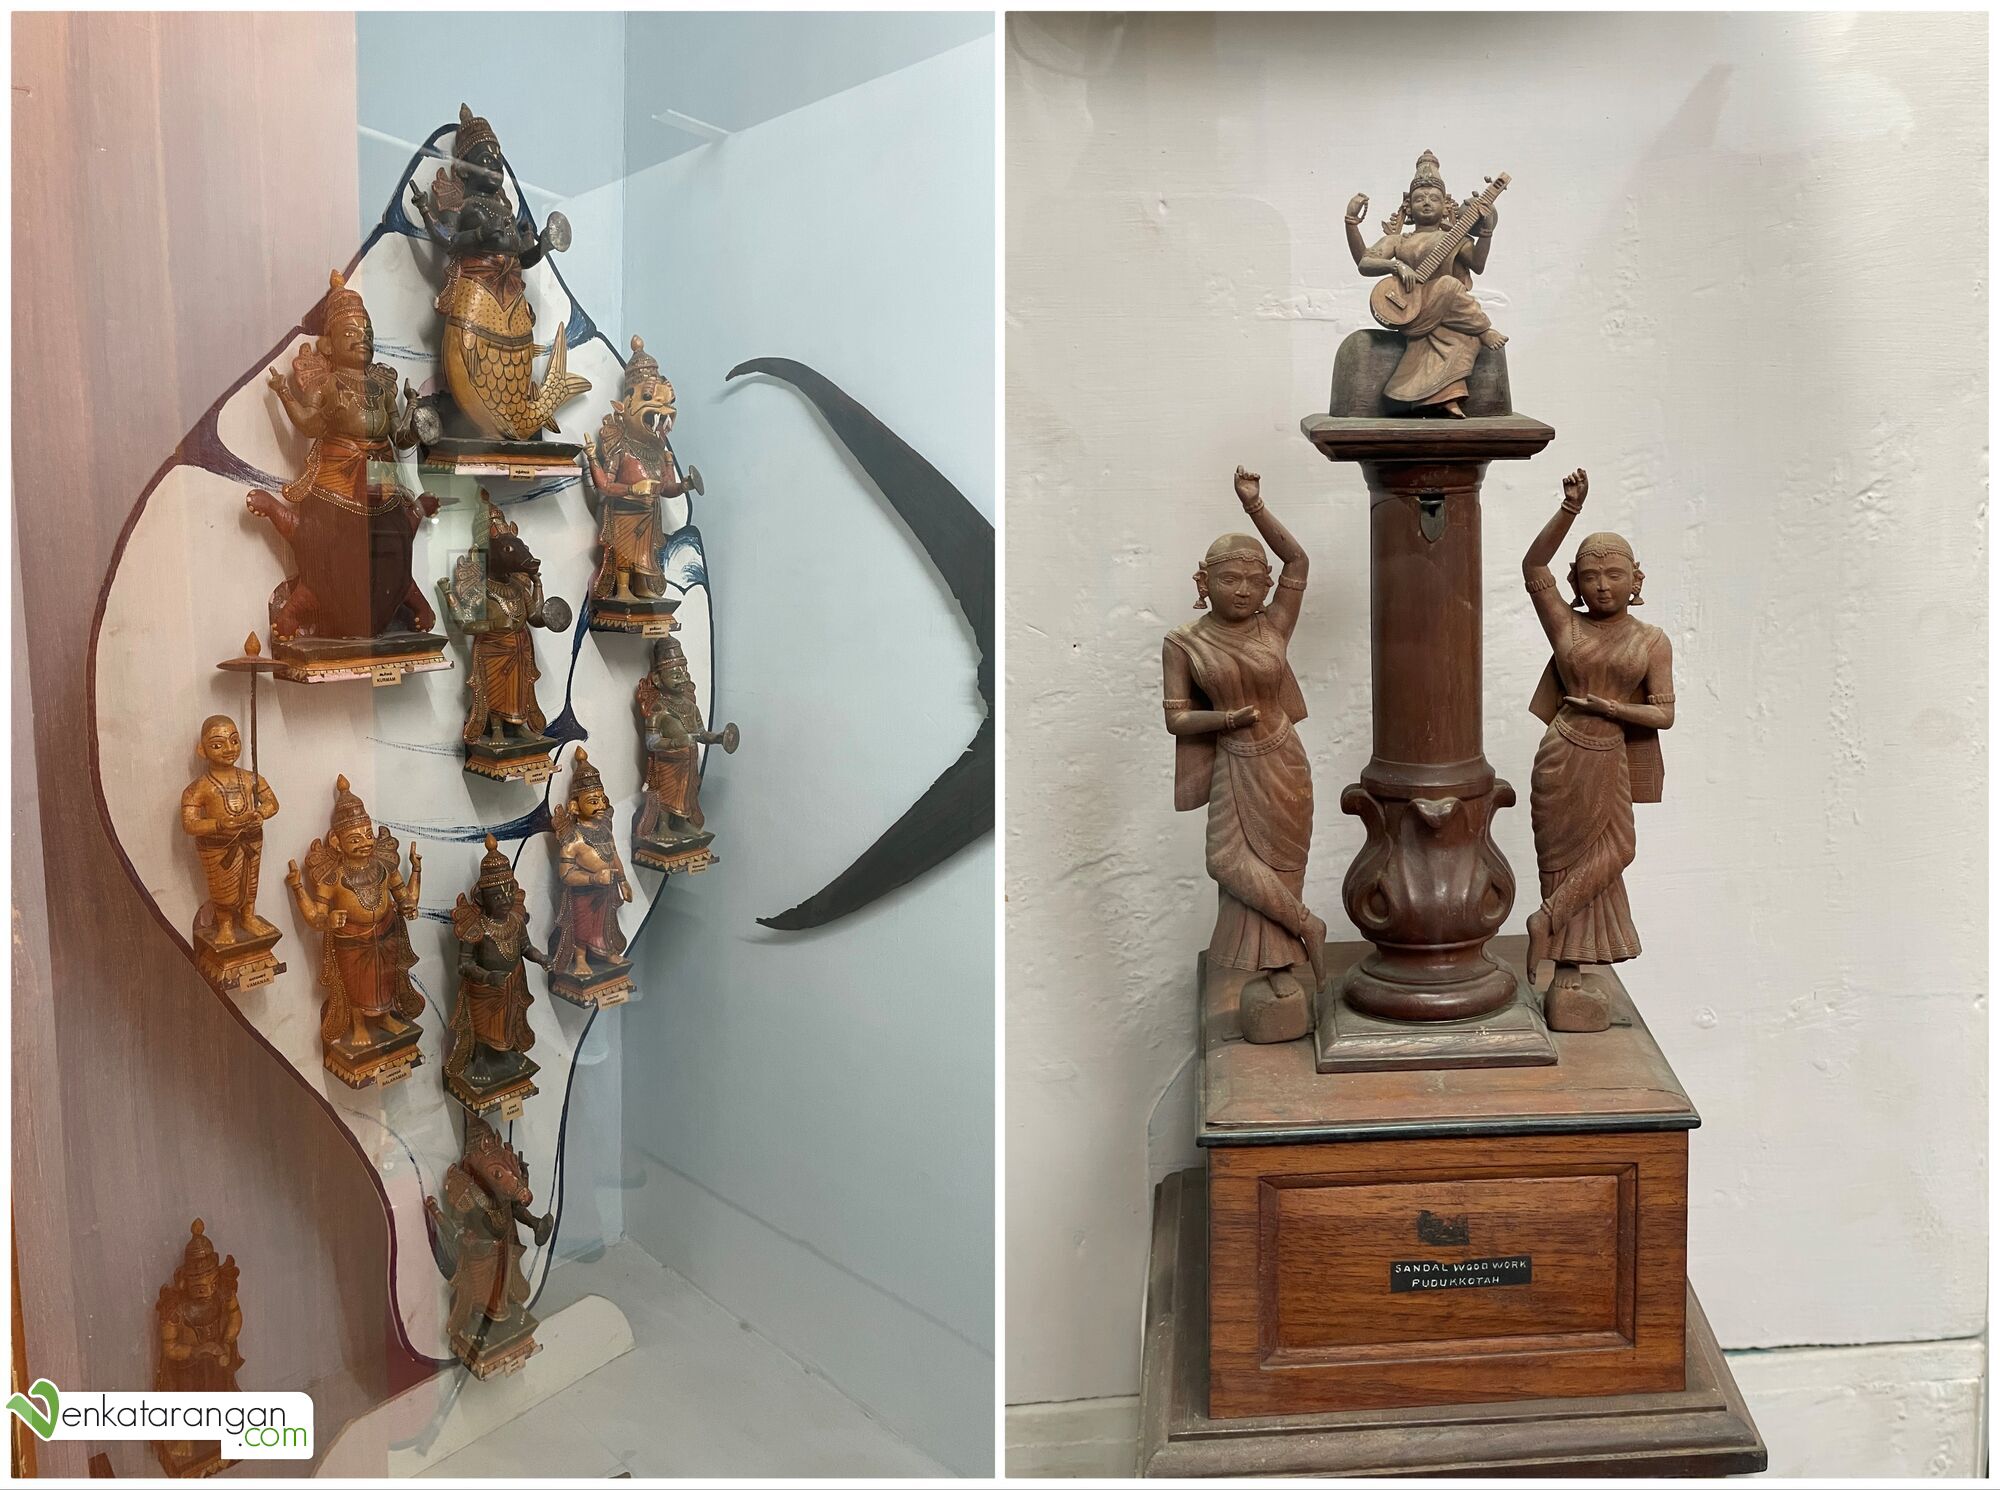 Lord Vishnu's Dasavatharam and Sandalwood work